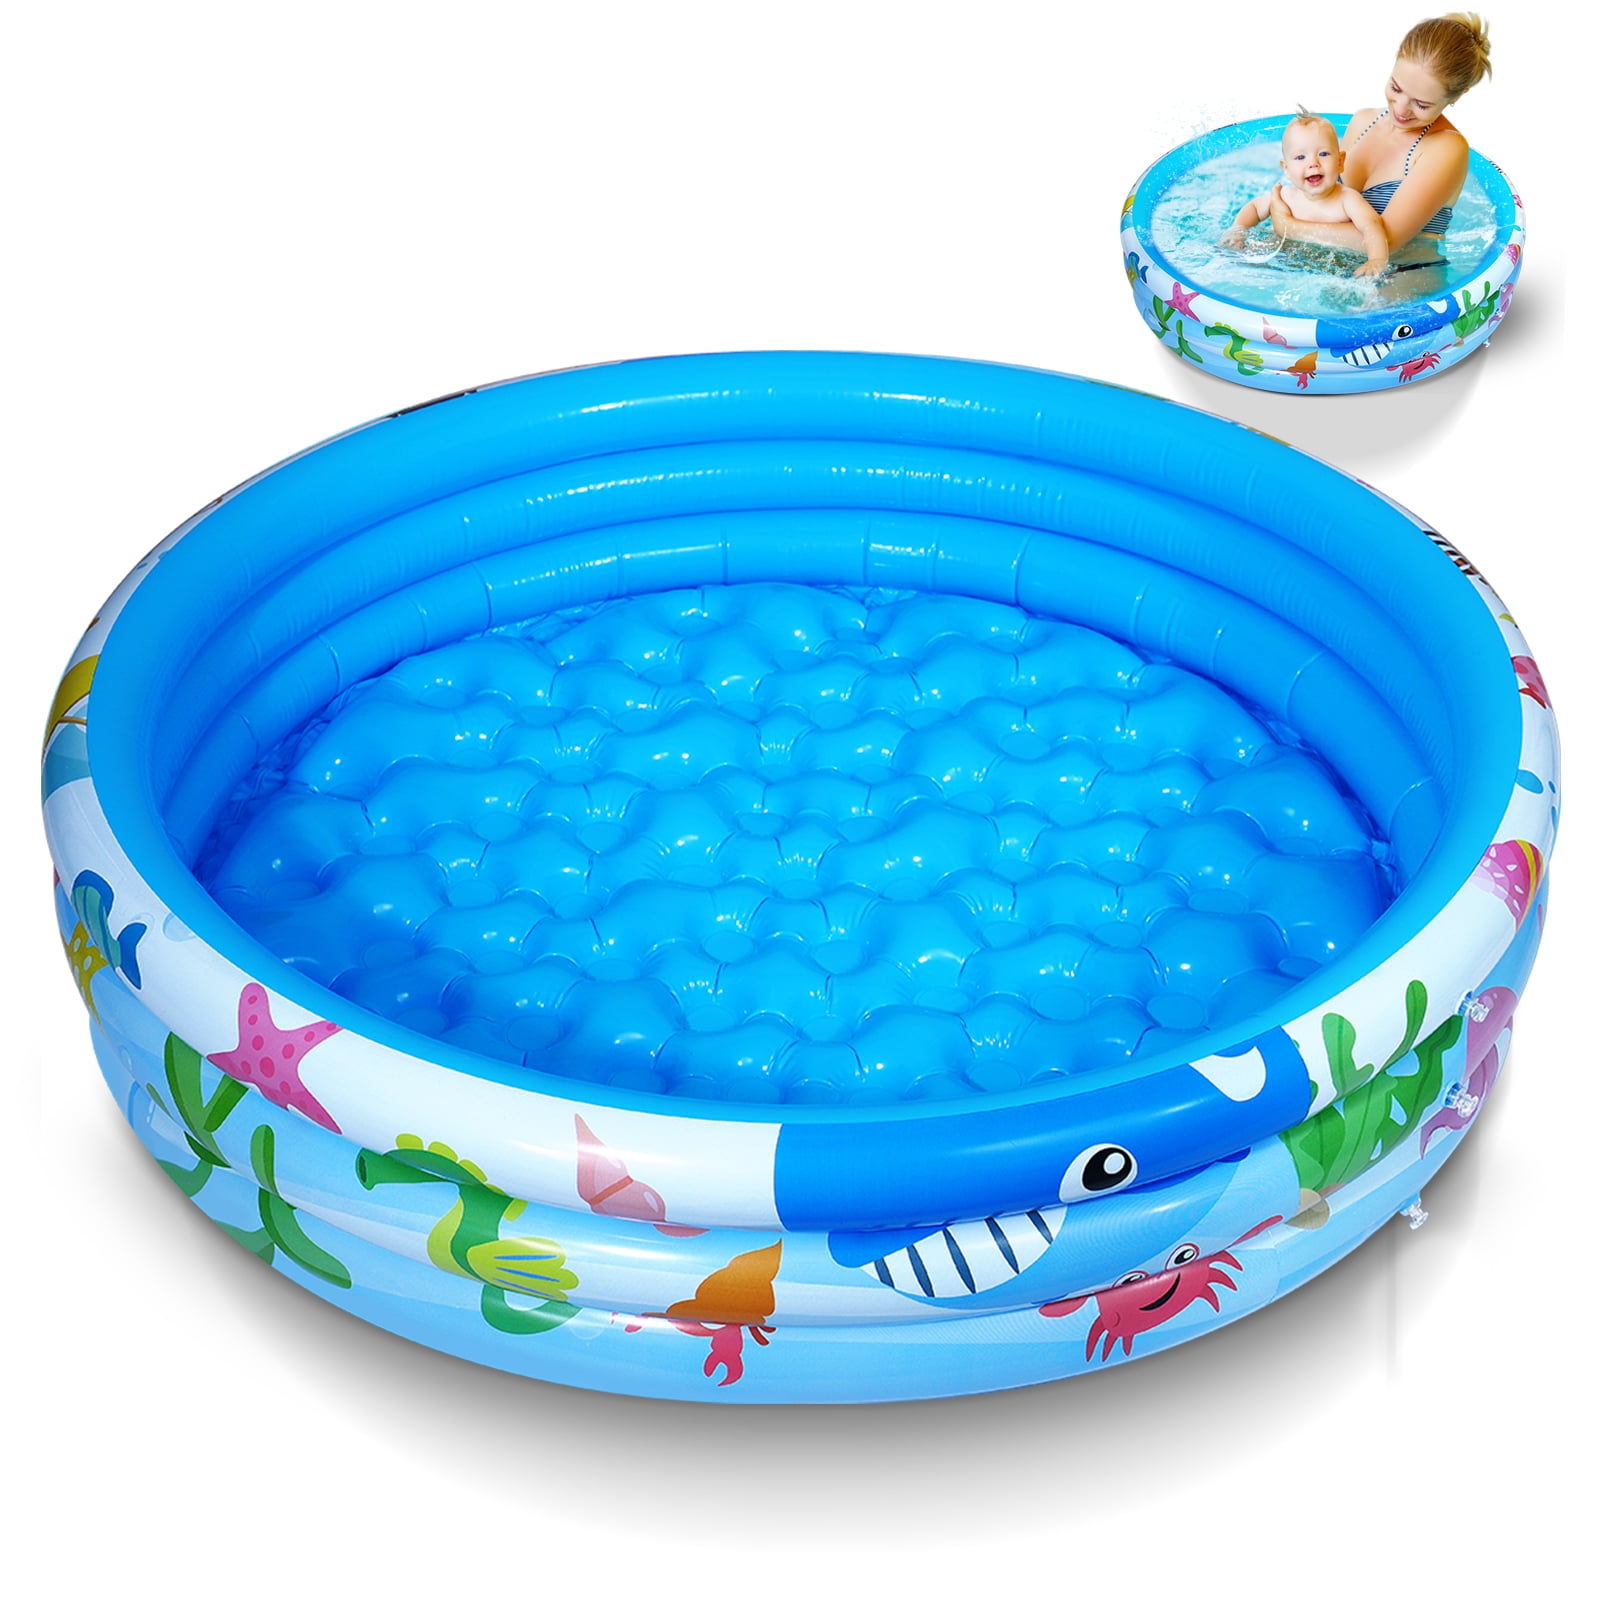 iBaseToy Kiddie Pool 47x 11 Kids Swimming Pool with 3 Rings Round Inflatable Baby Orange Cartoon Pool for Indoor Outdoor Garden Backyard 